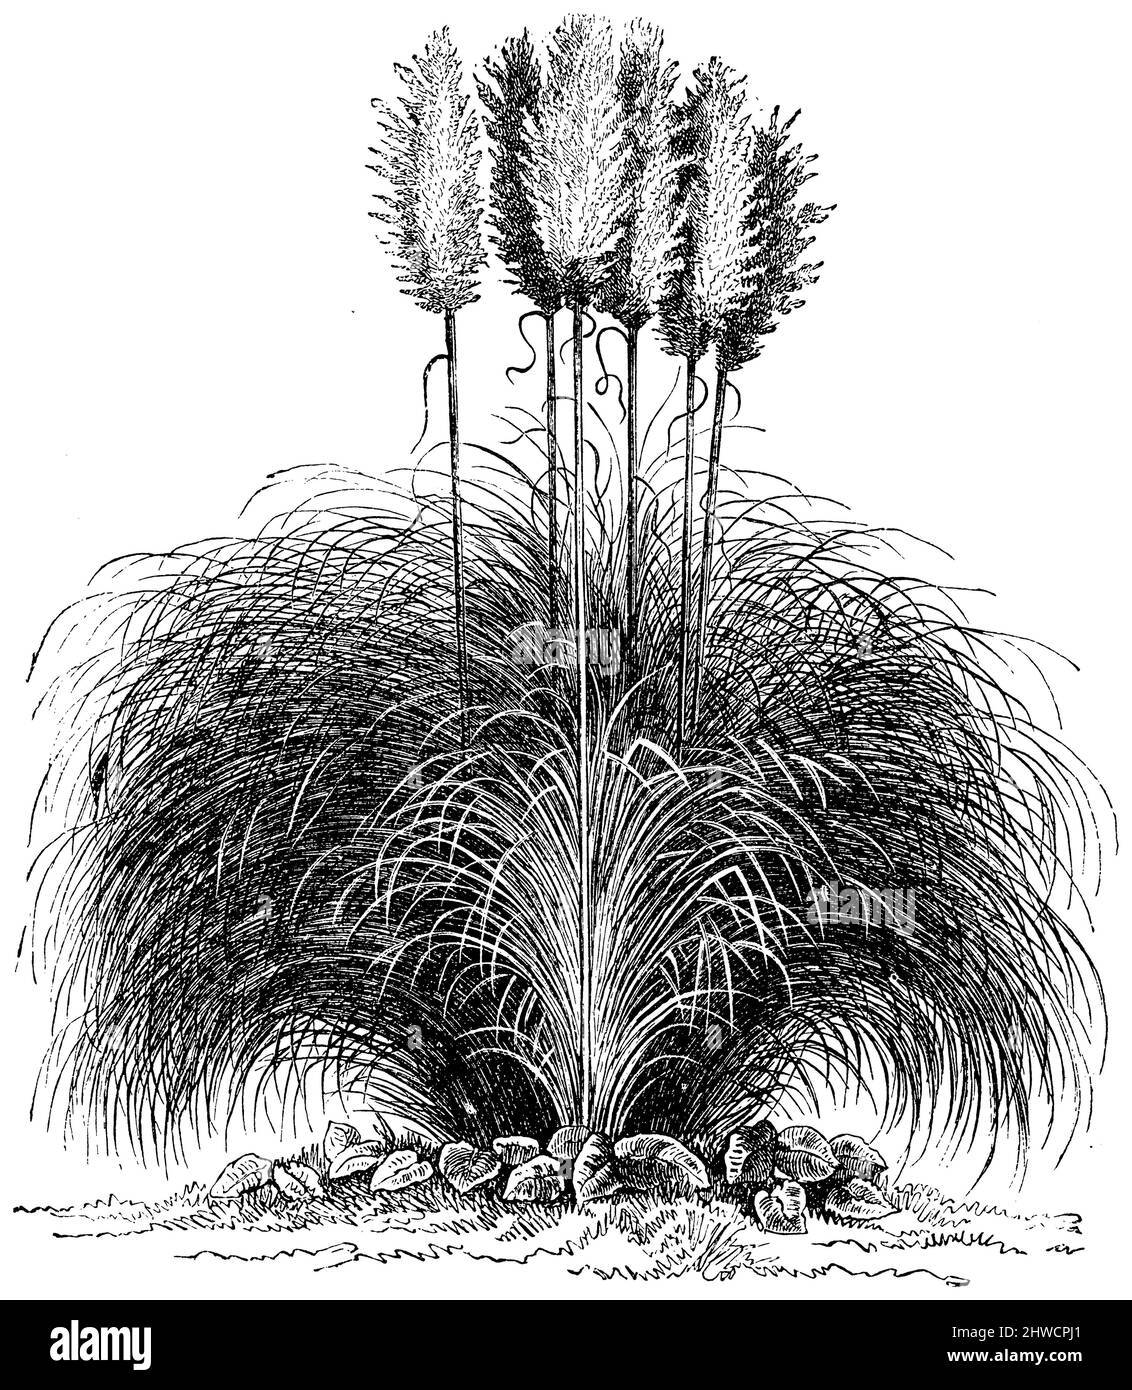 pinpas herbe , Cortaderia selloana, (livre botanique, ca. 1900), Amerikanisches Pampagras , herbe de la pampa Banque D'Images